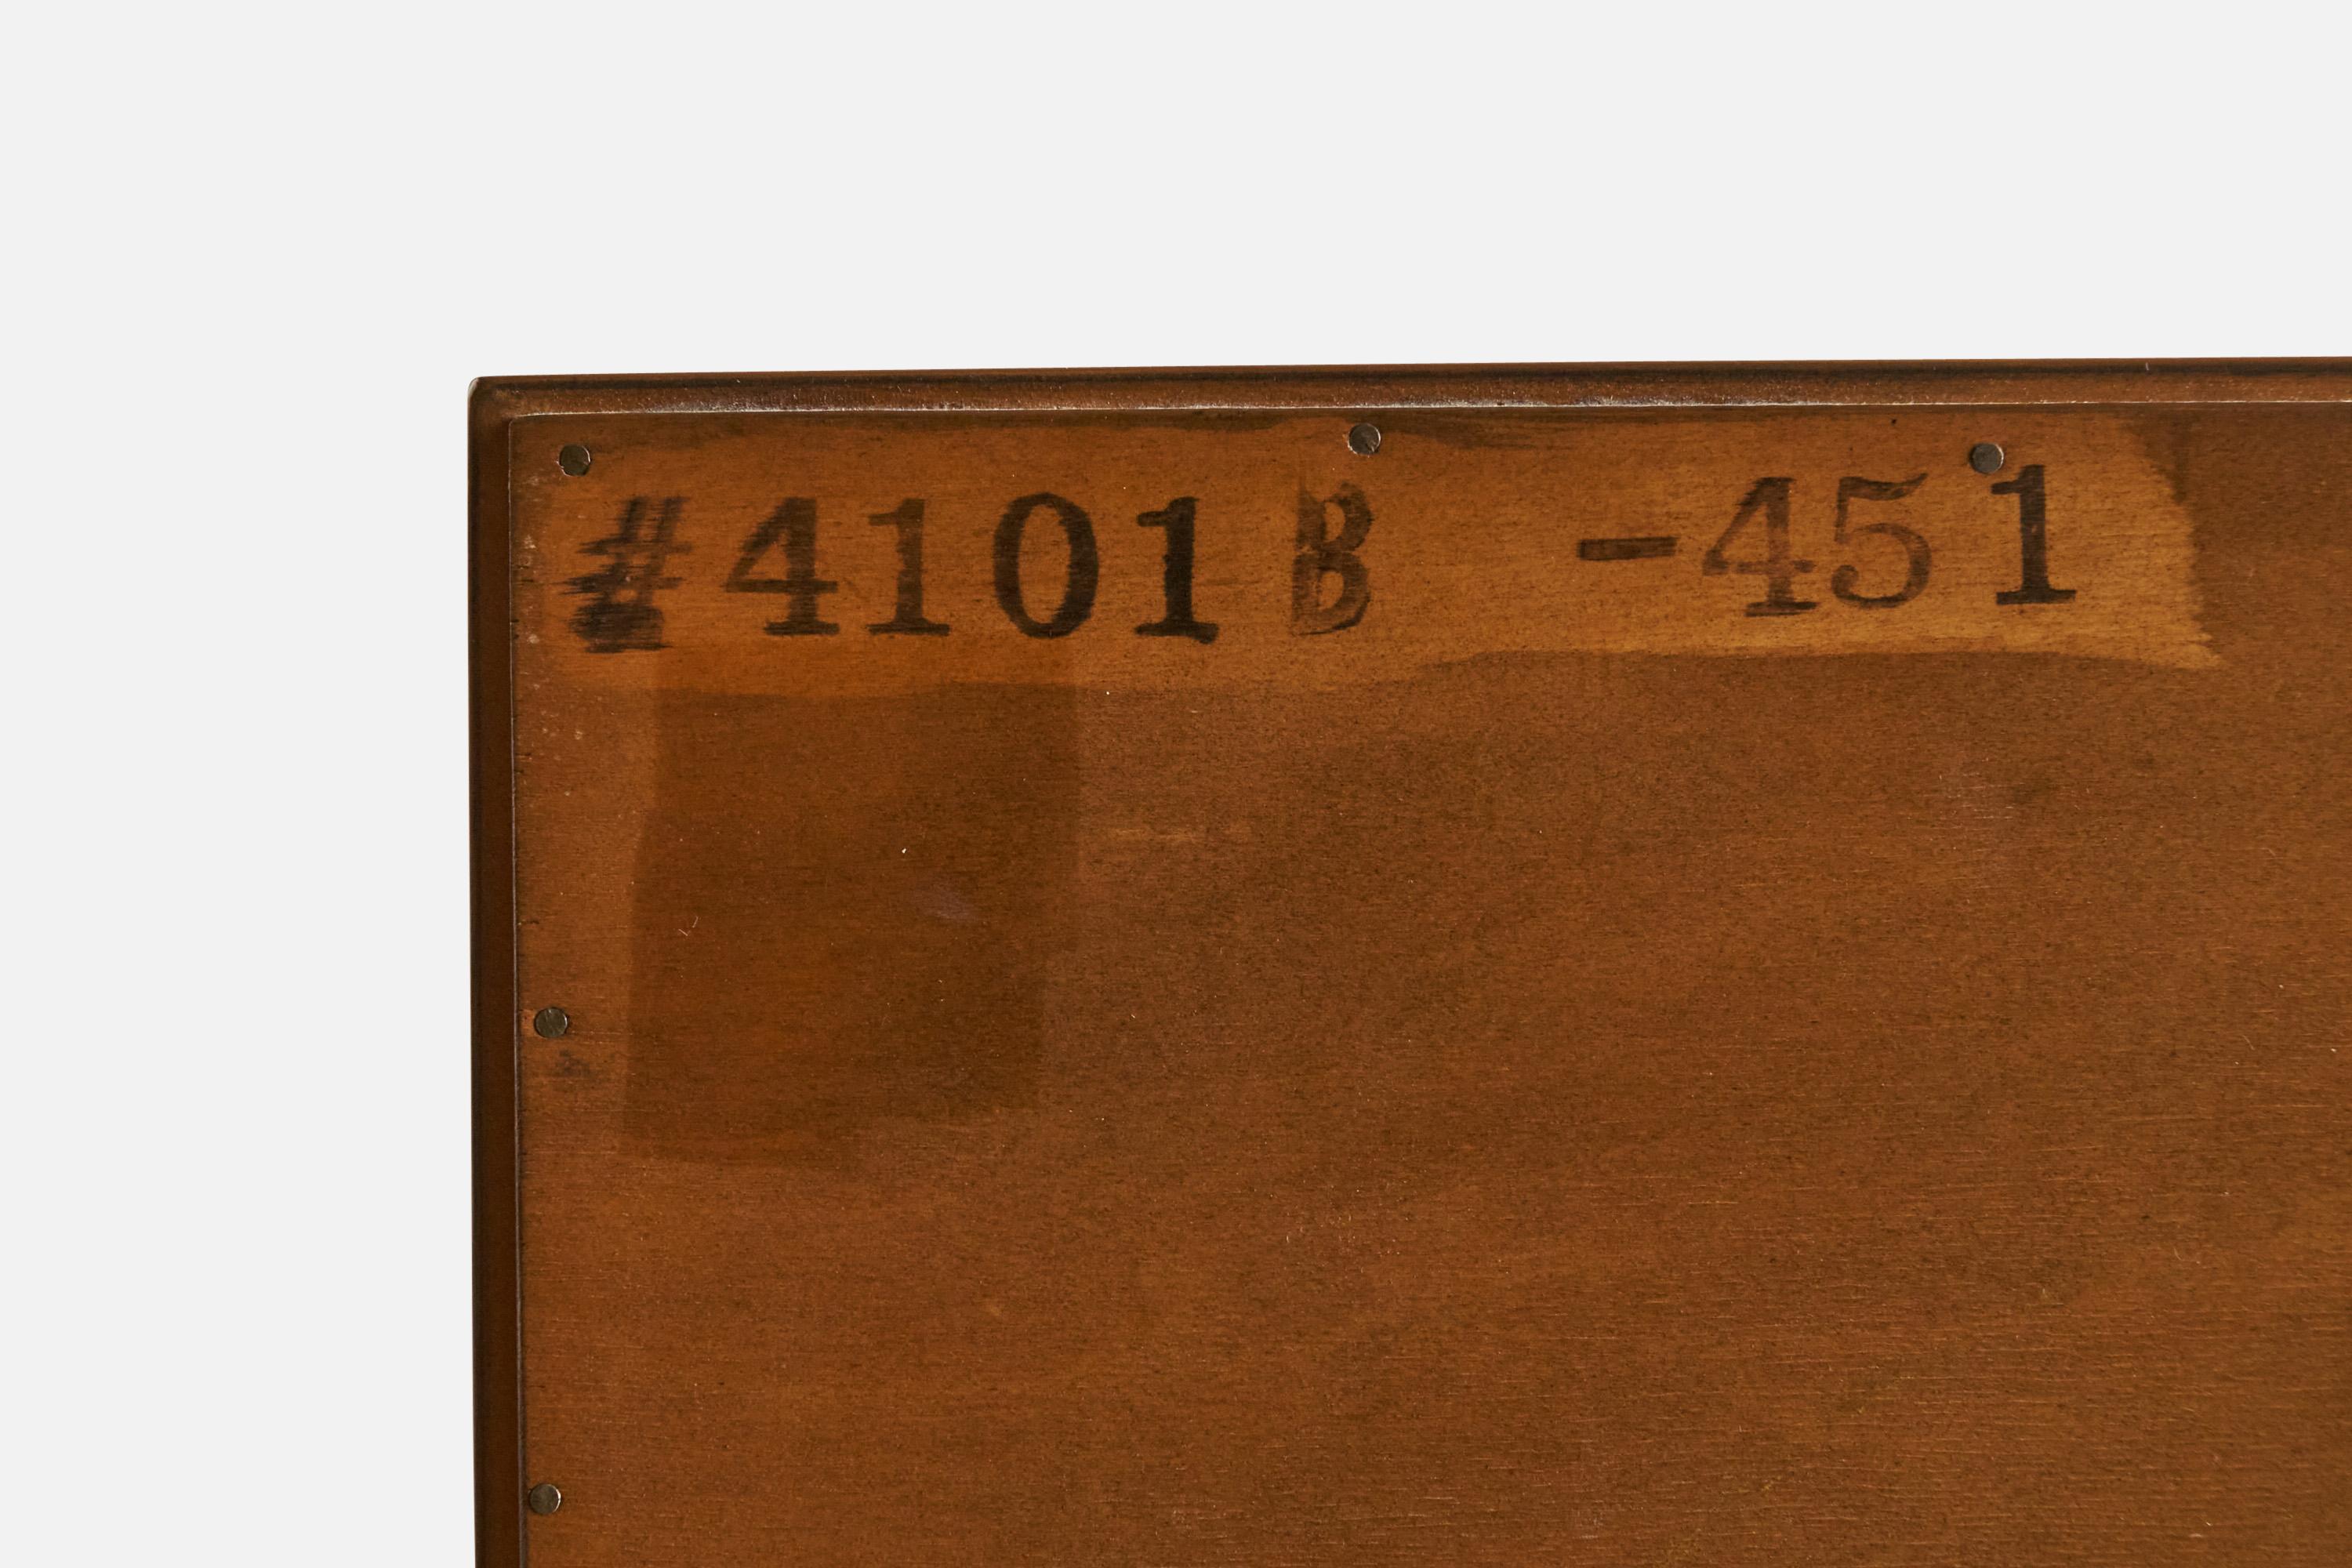 Bert England, Kommode, Holz, Messing, USA, 1940er Jahre (Moderne der Mitte des Jahrhunderts) im Angebot